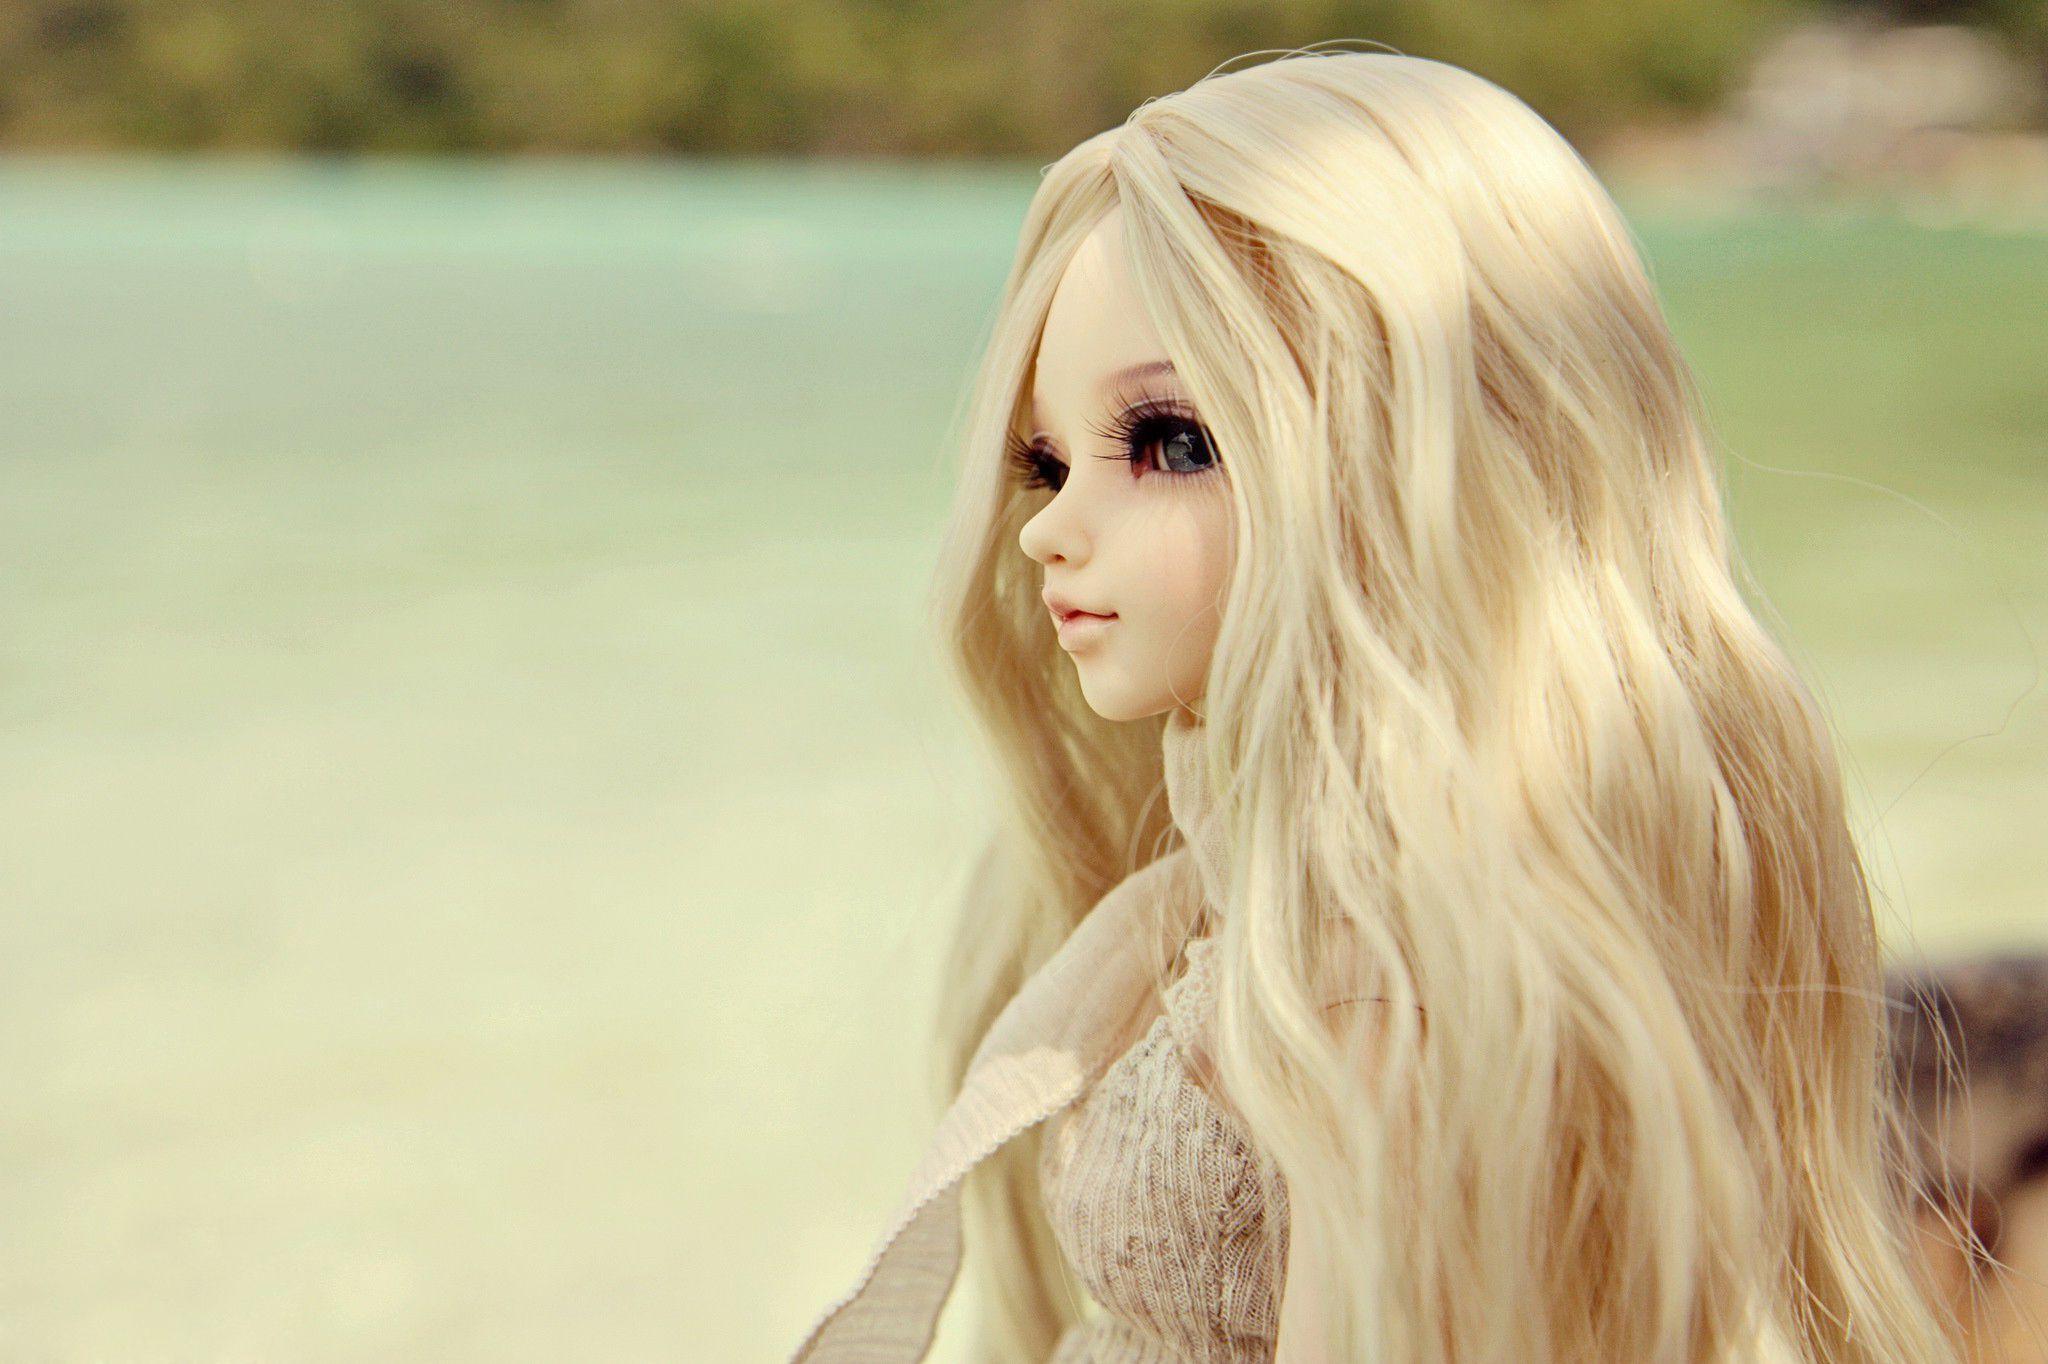 Free Download Cute Sweet Barbie Dolls&;s HD Image Gallery. Rocks